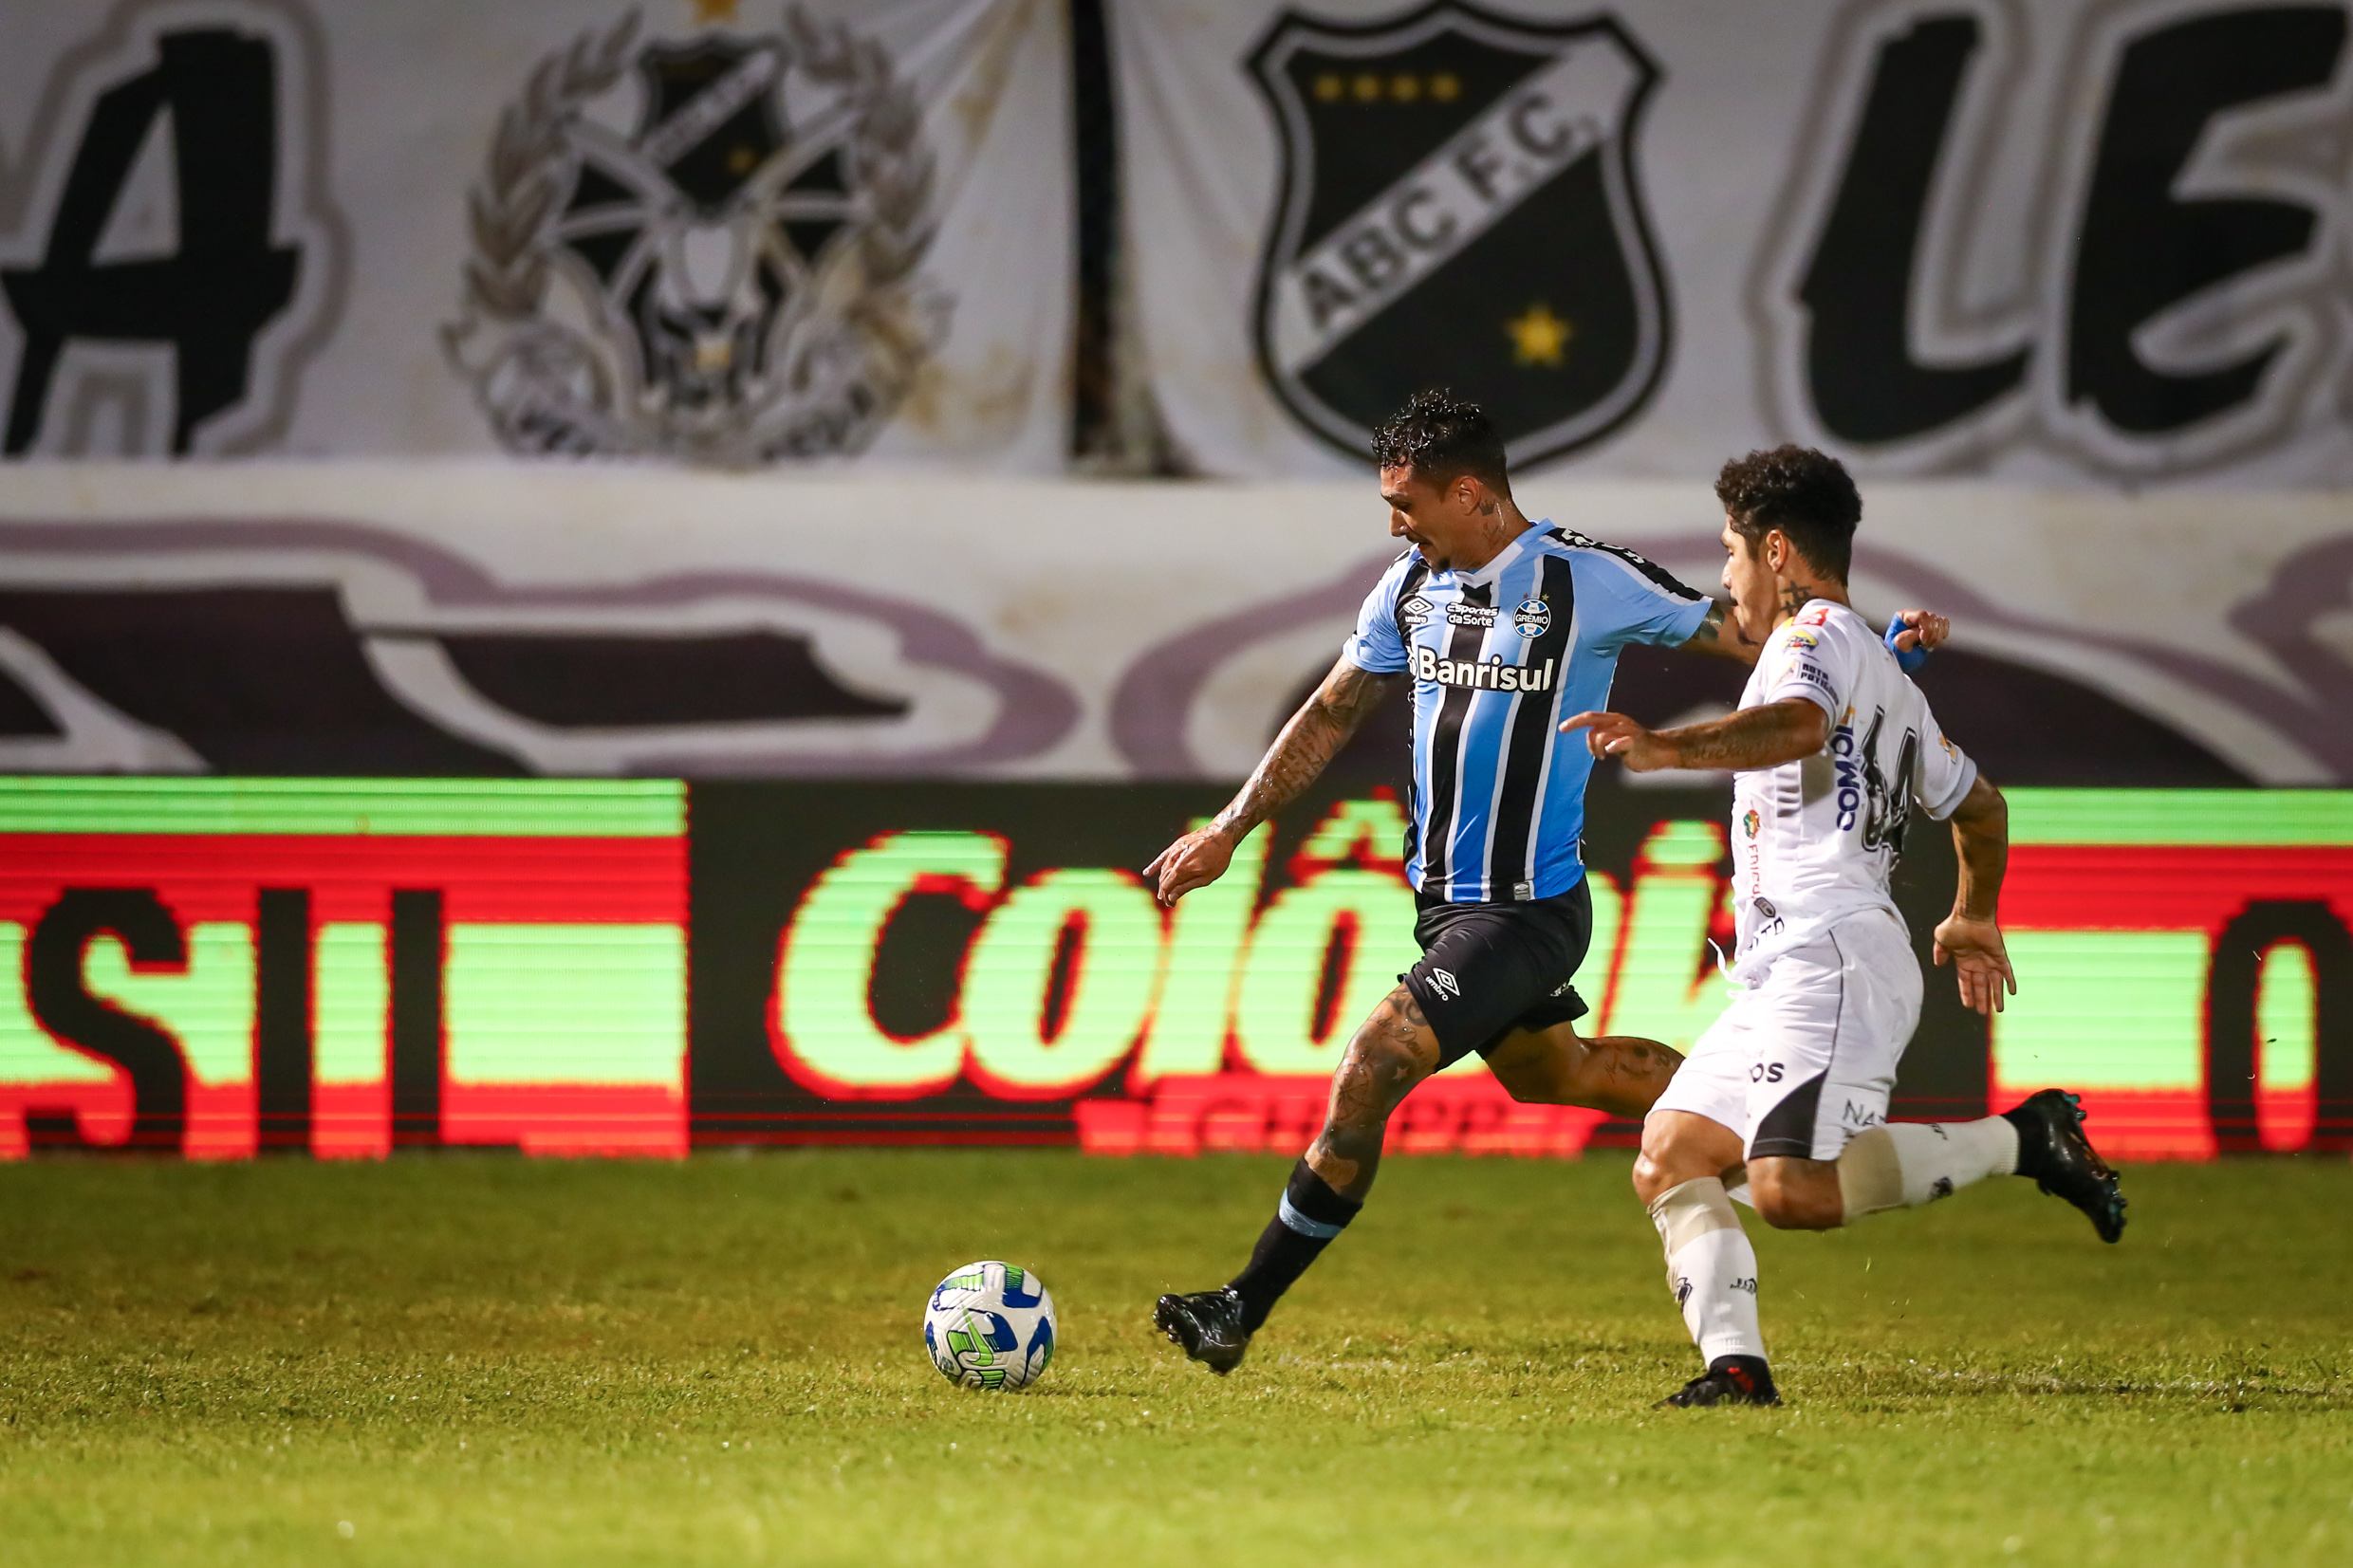 Grêmio vs ABC: A Matchup Between Two Brazilian Football Clubs